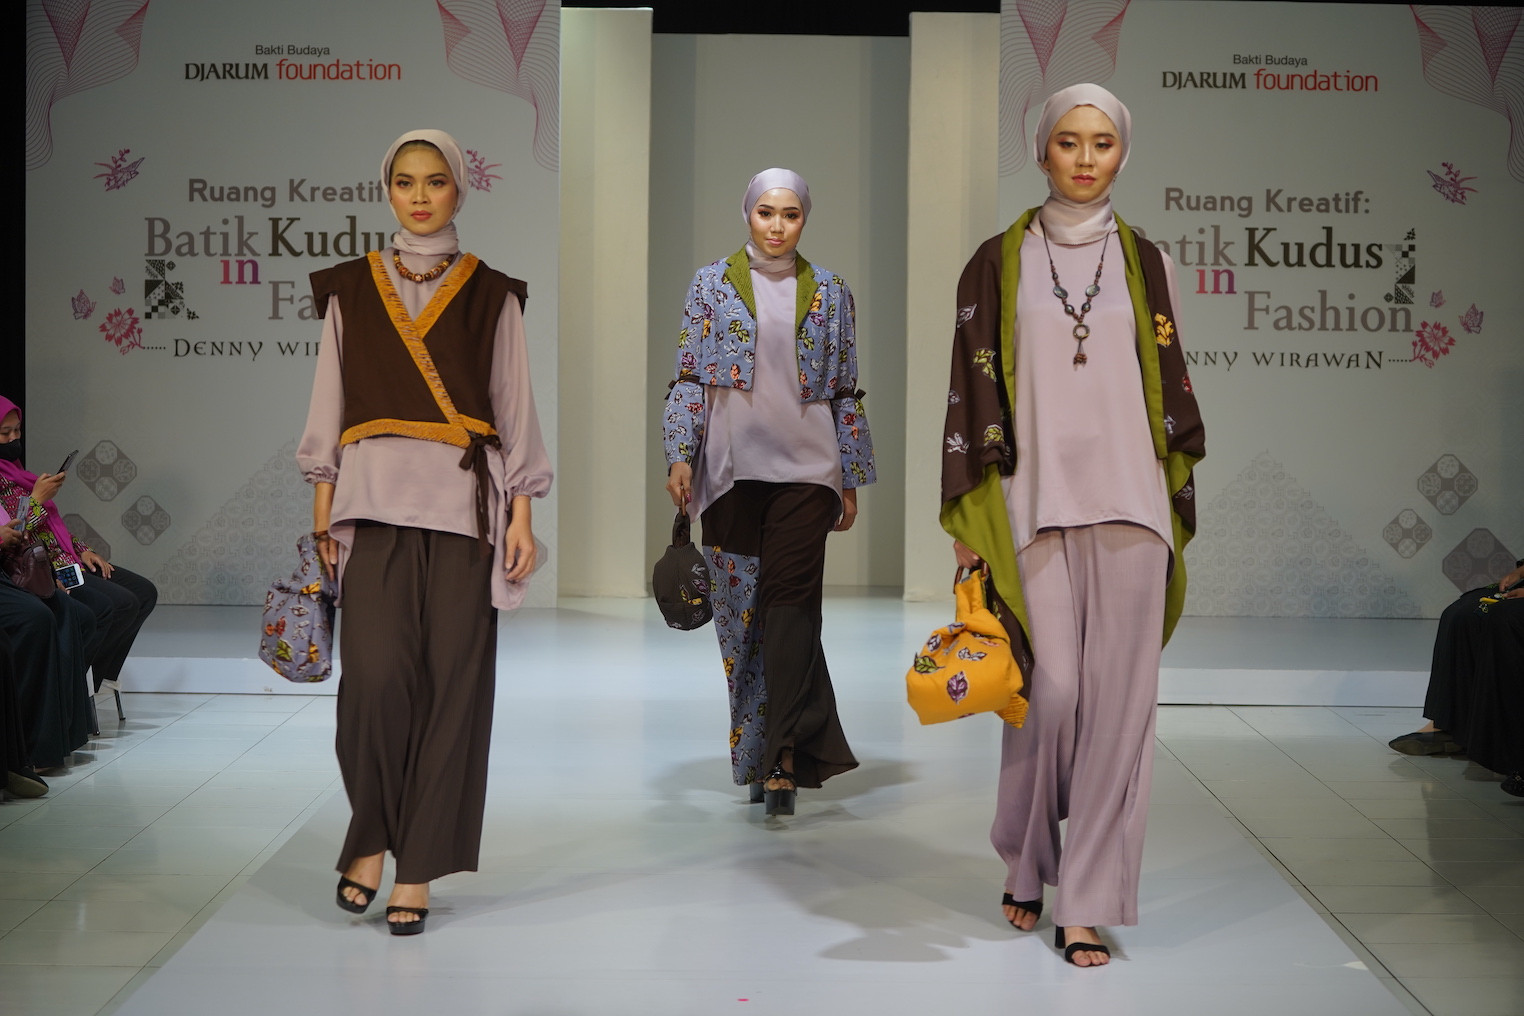 Jadikan Batik Kudus Fashionable, Bakti Budaya Djarum Foundation Gelar Pembinaan